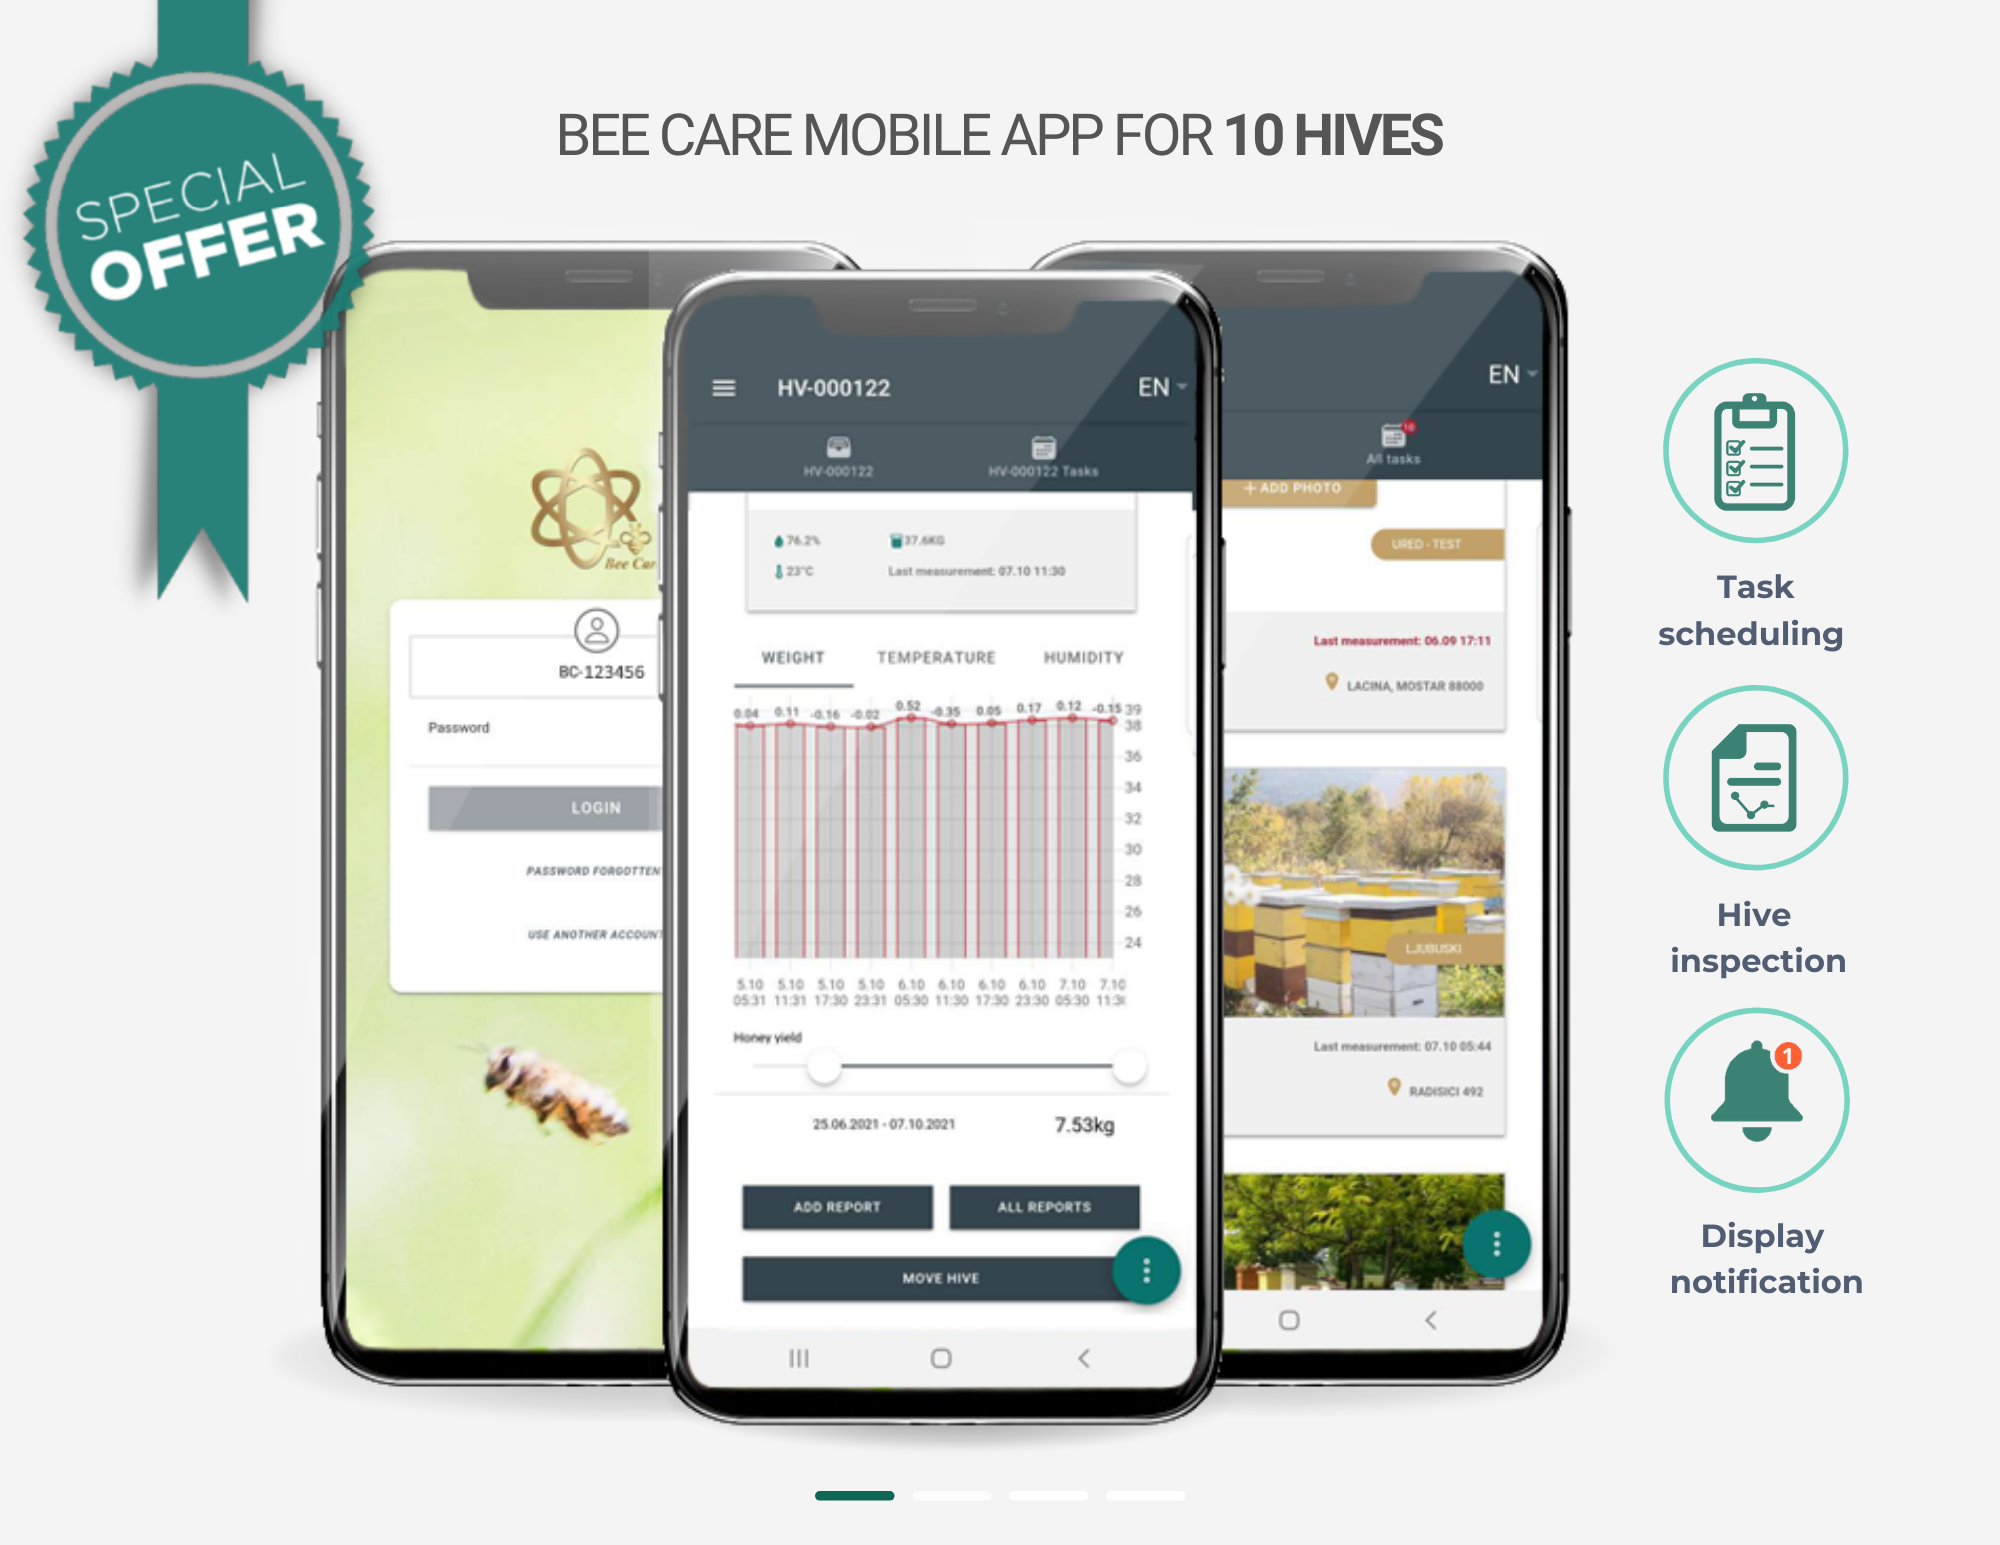 offer_mobile_app_beekeepers